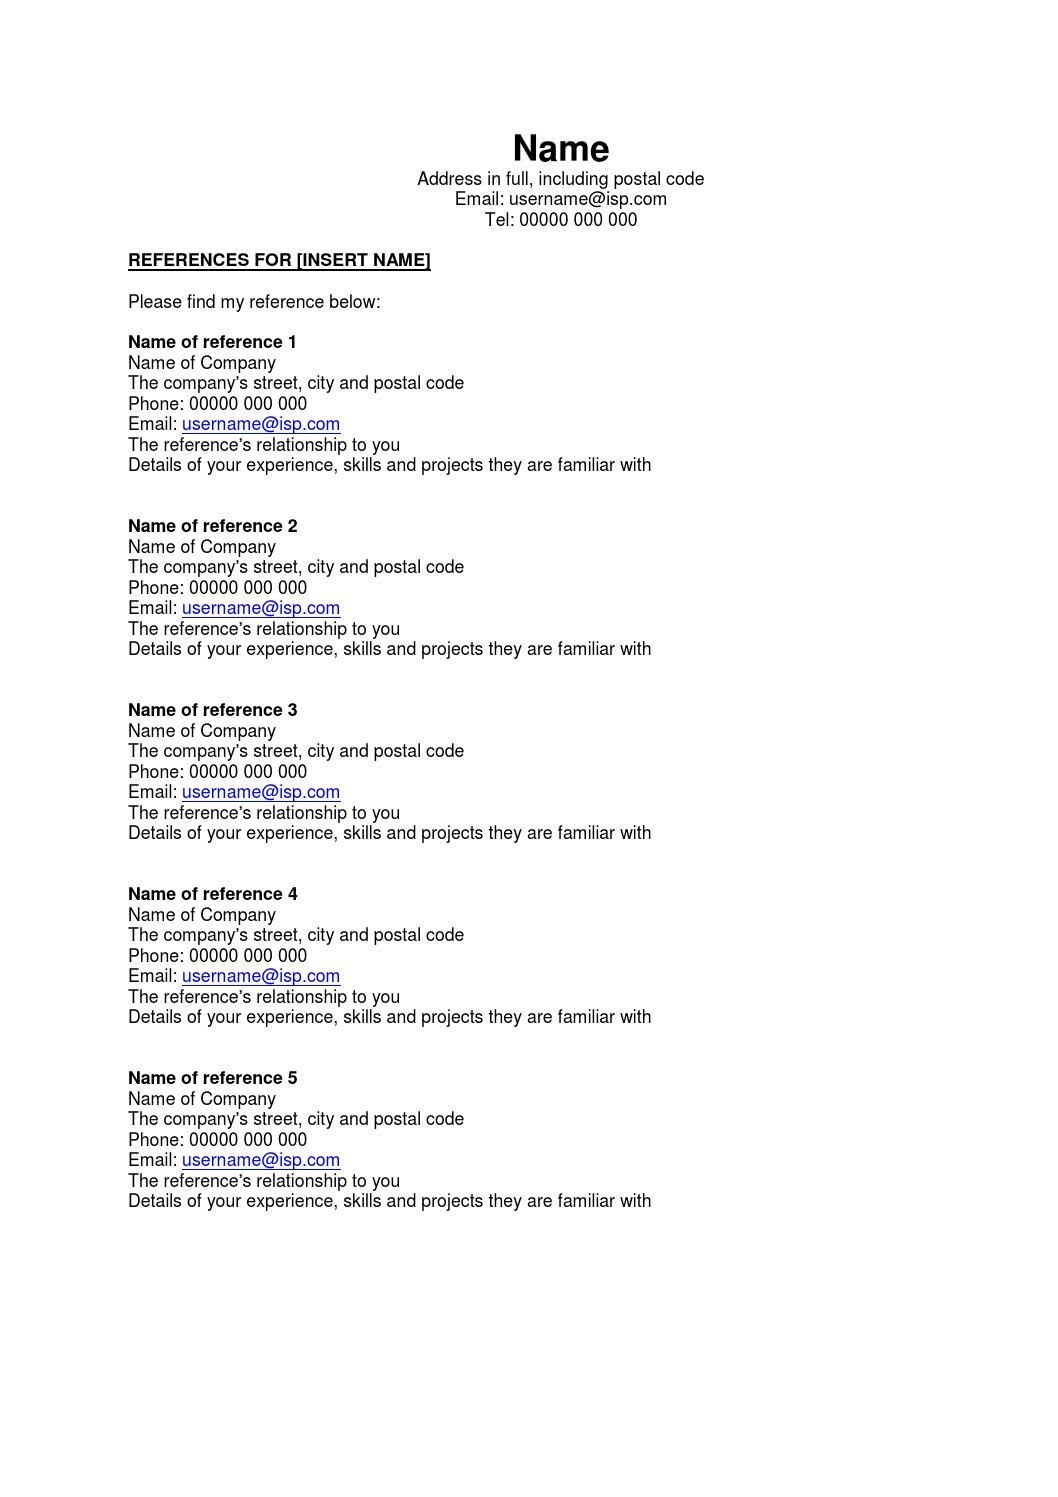 Job Reference sheet template Jobs